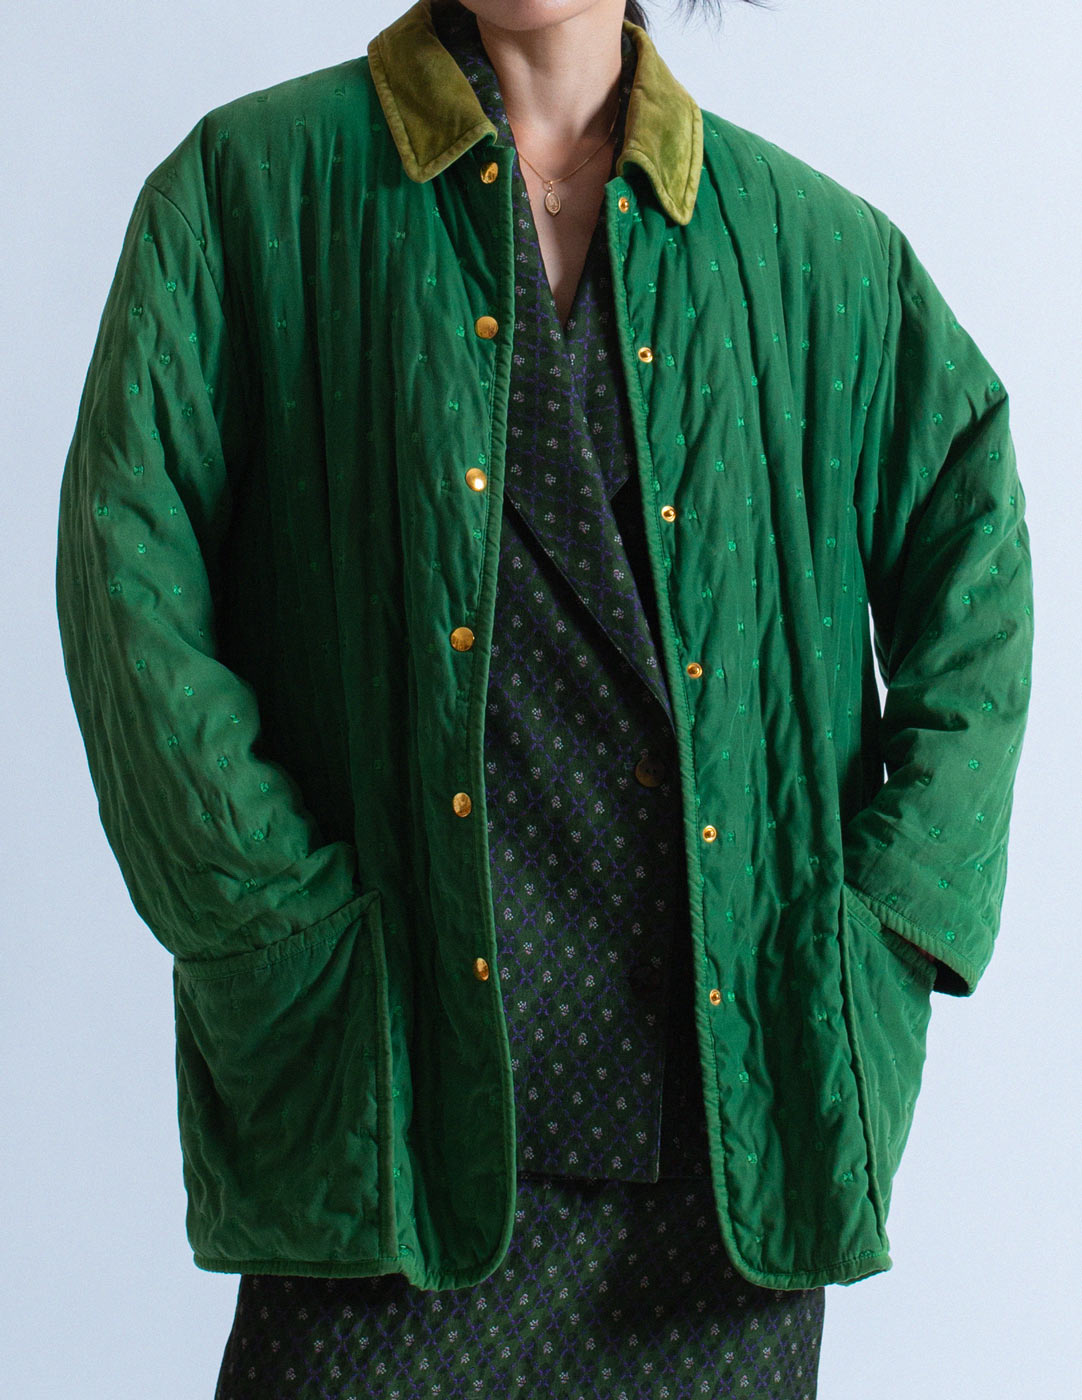 Hermès vintage green quilted coat open detail